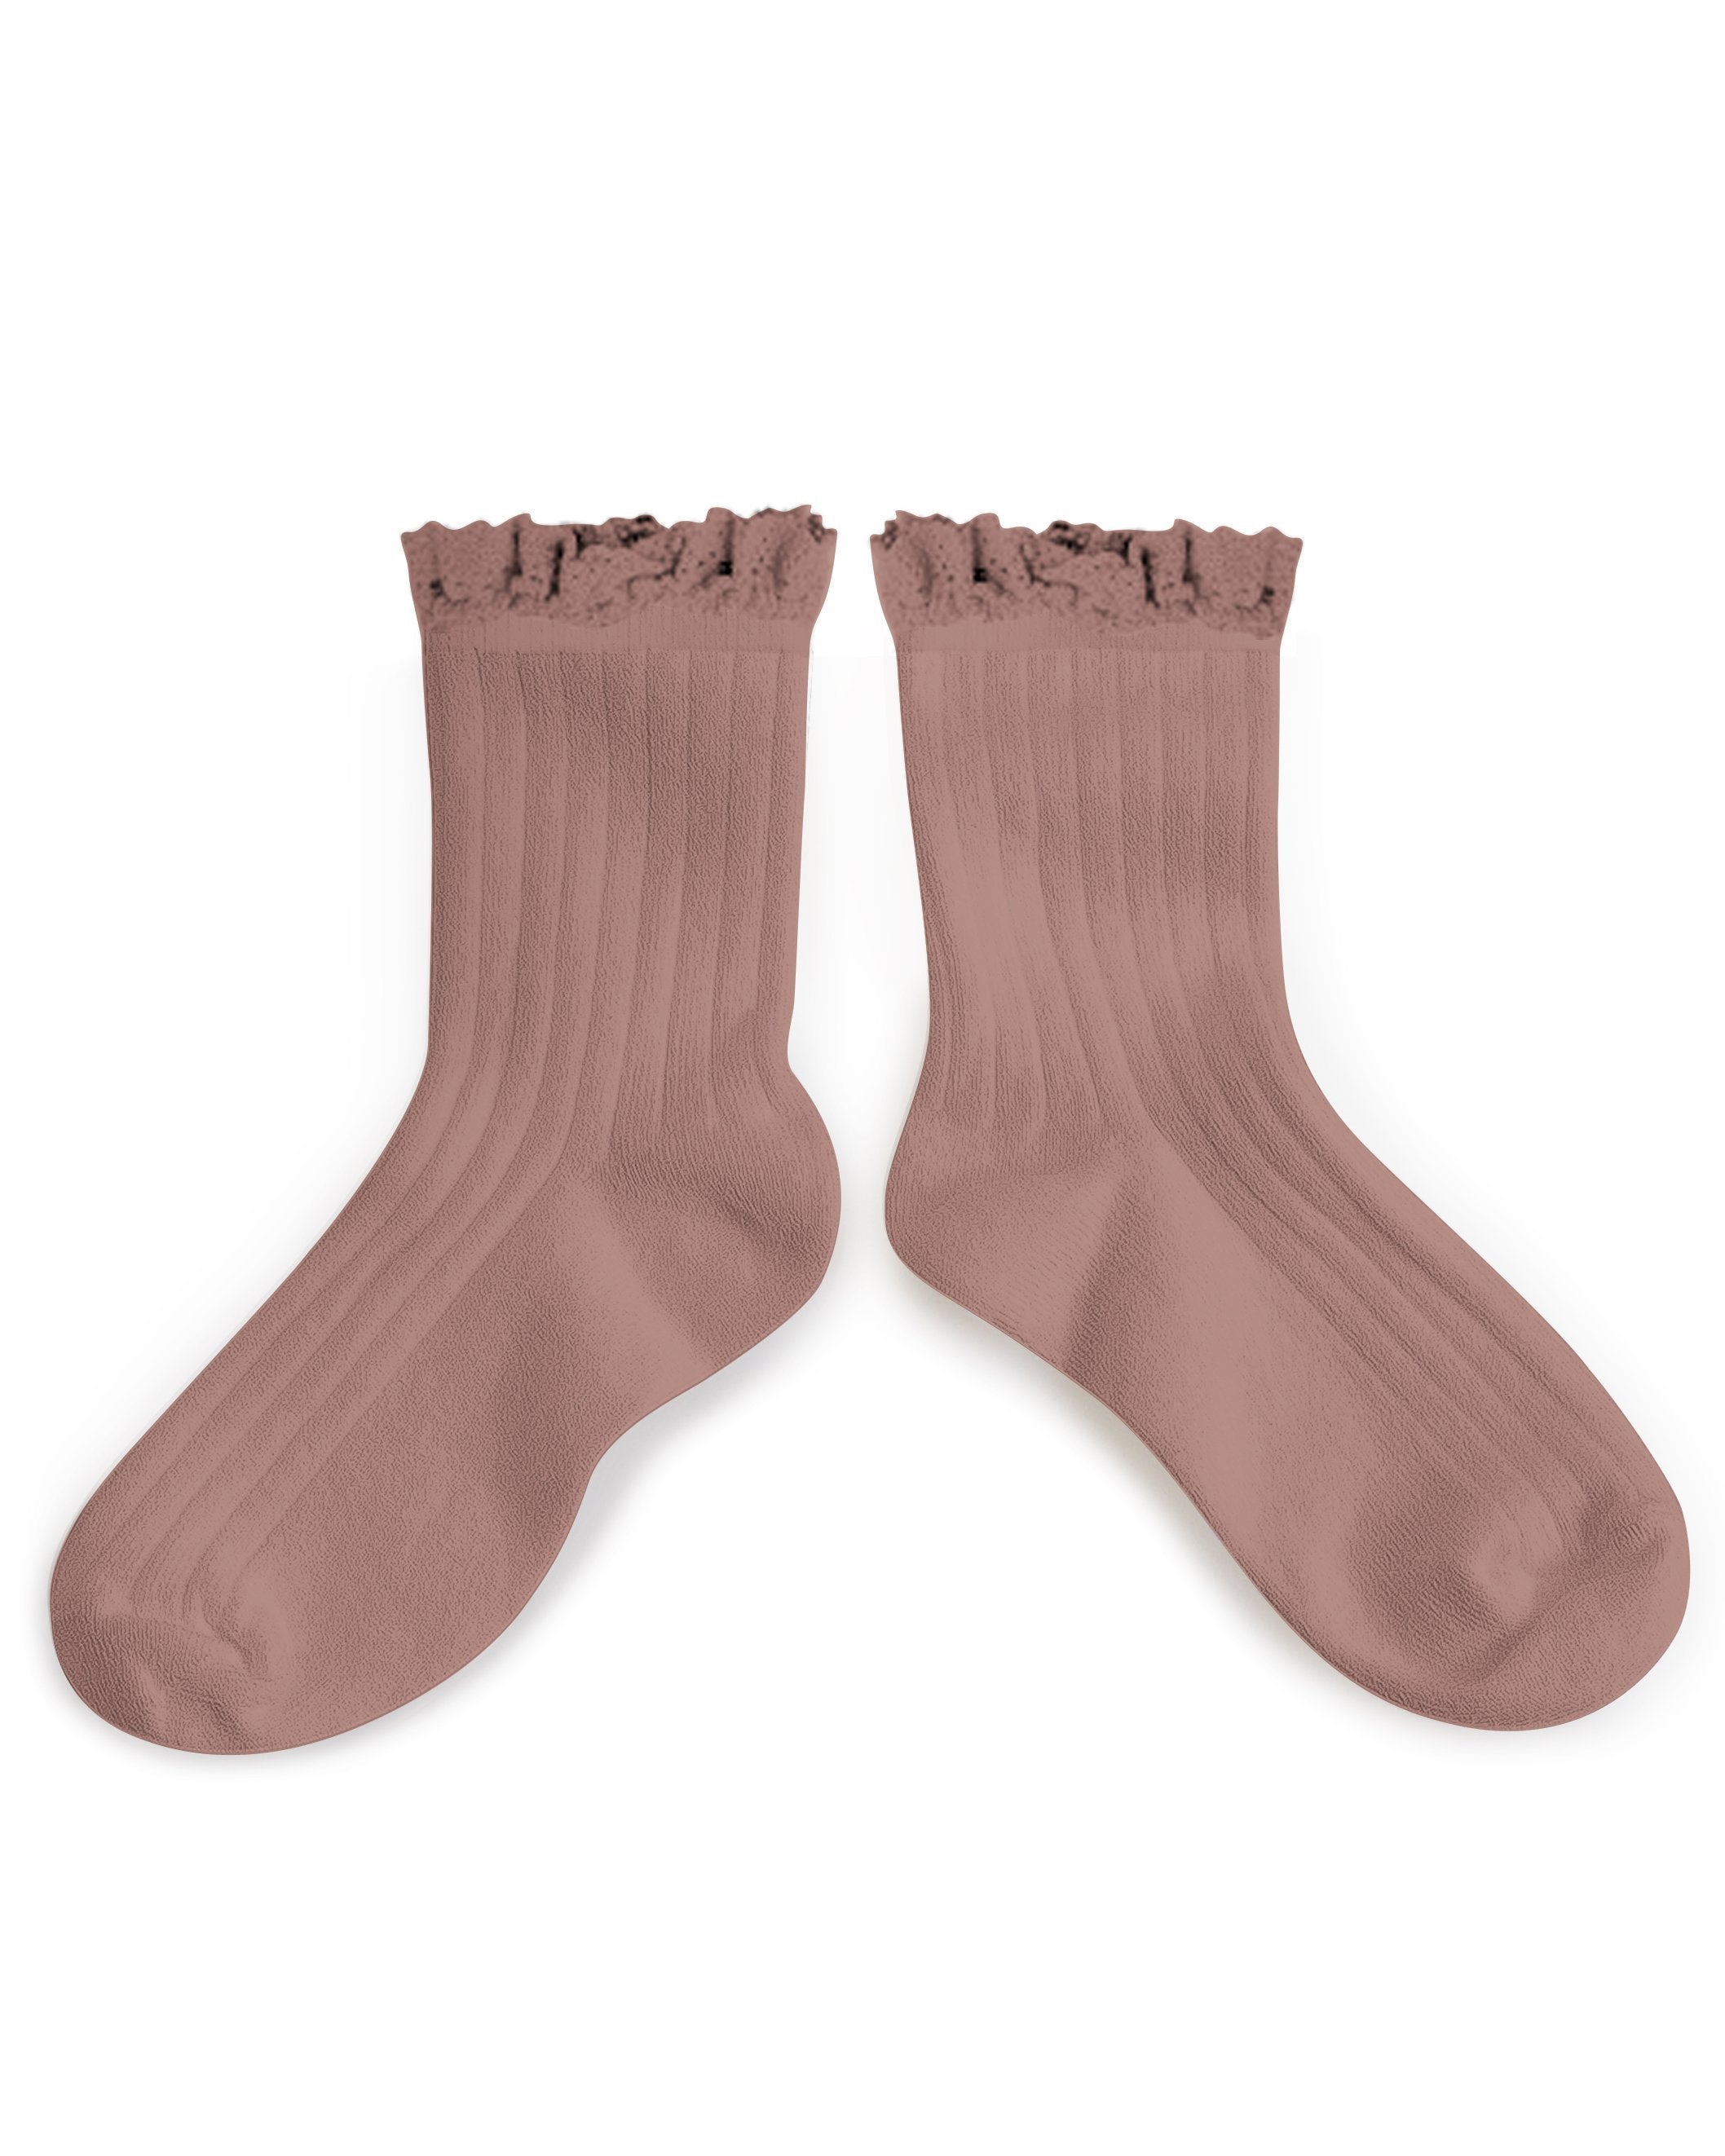 lili ankle socks in praline de lyon